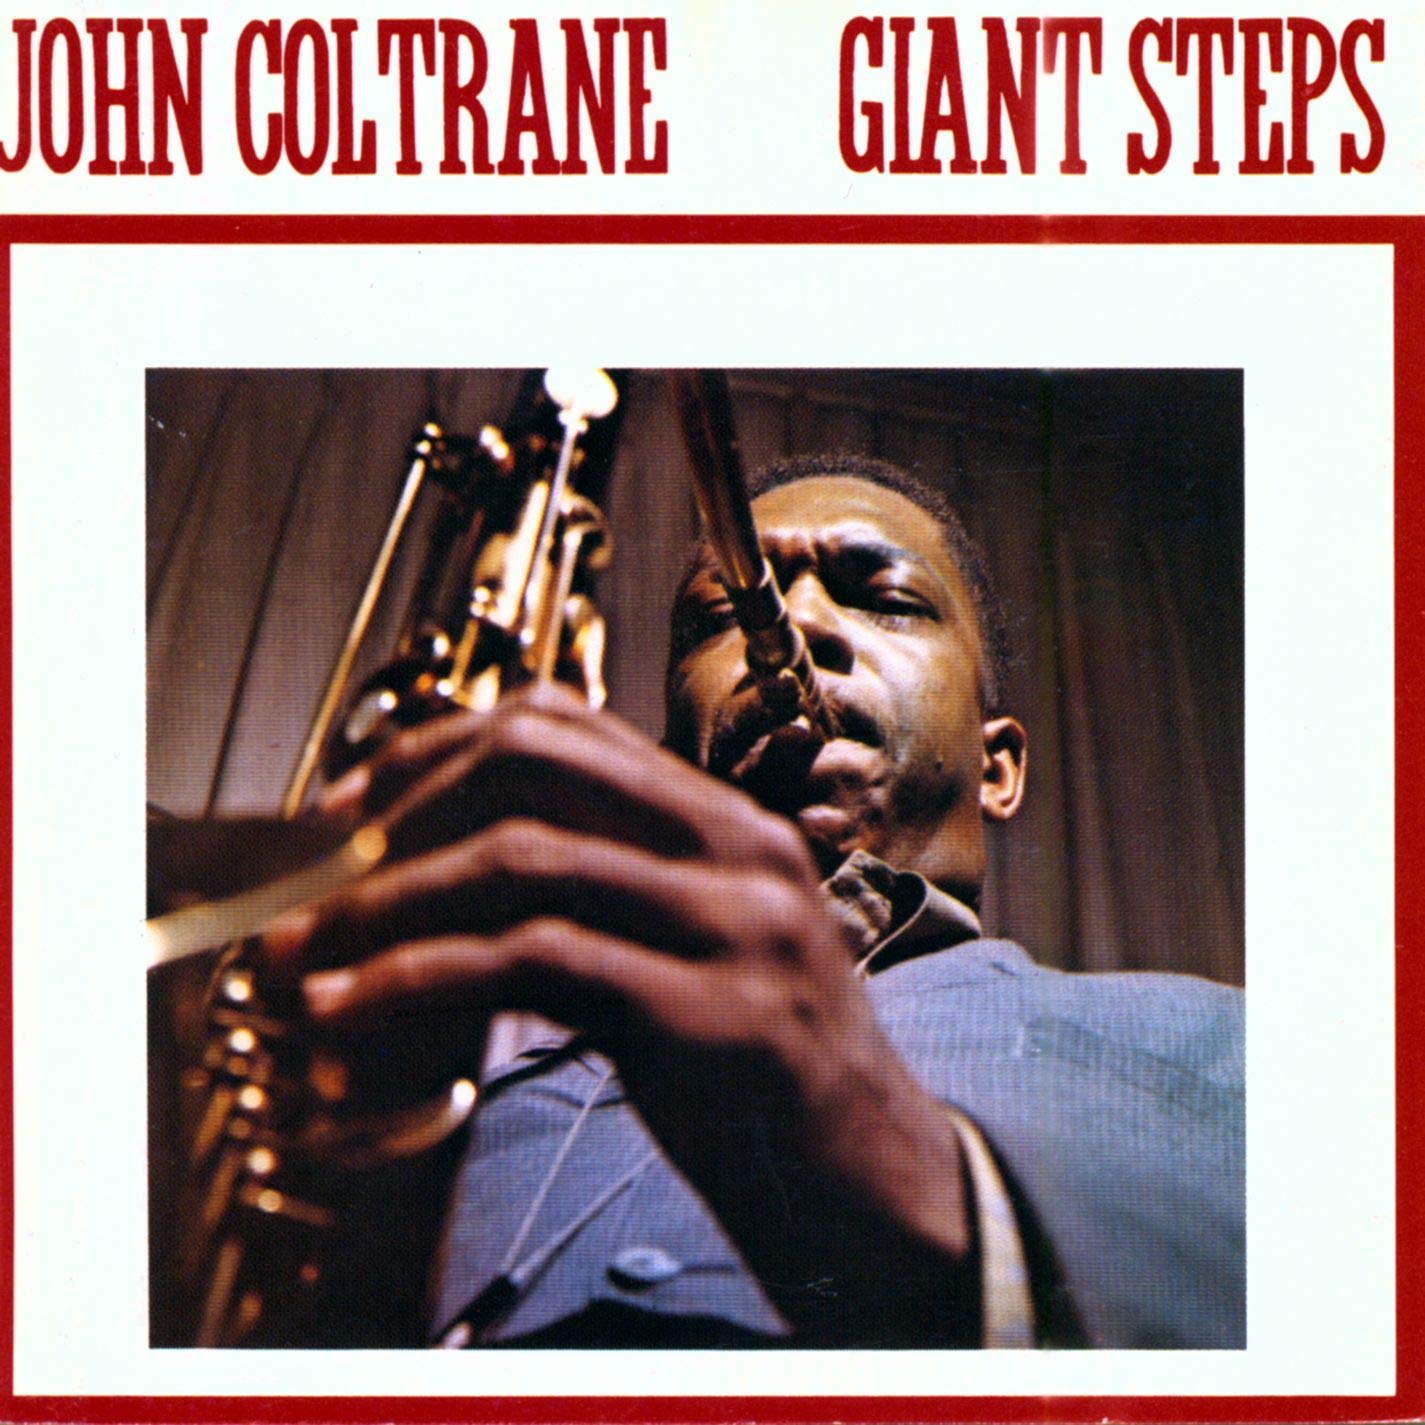 John Coltrane "Giant Steps" LP